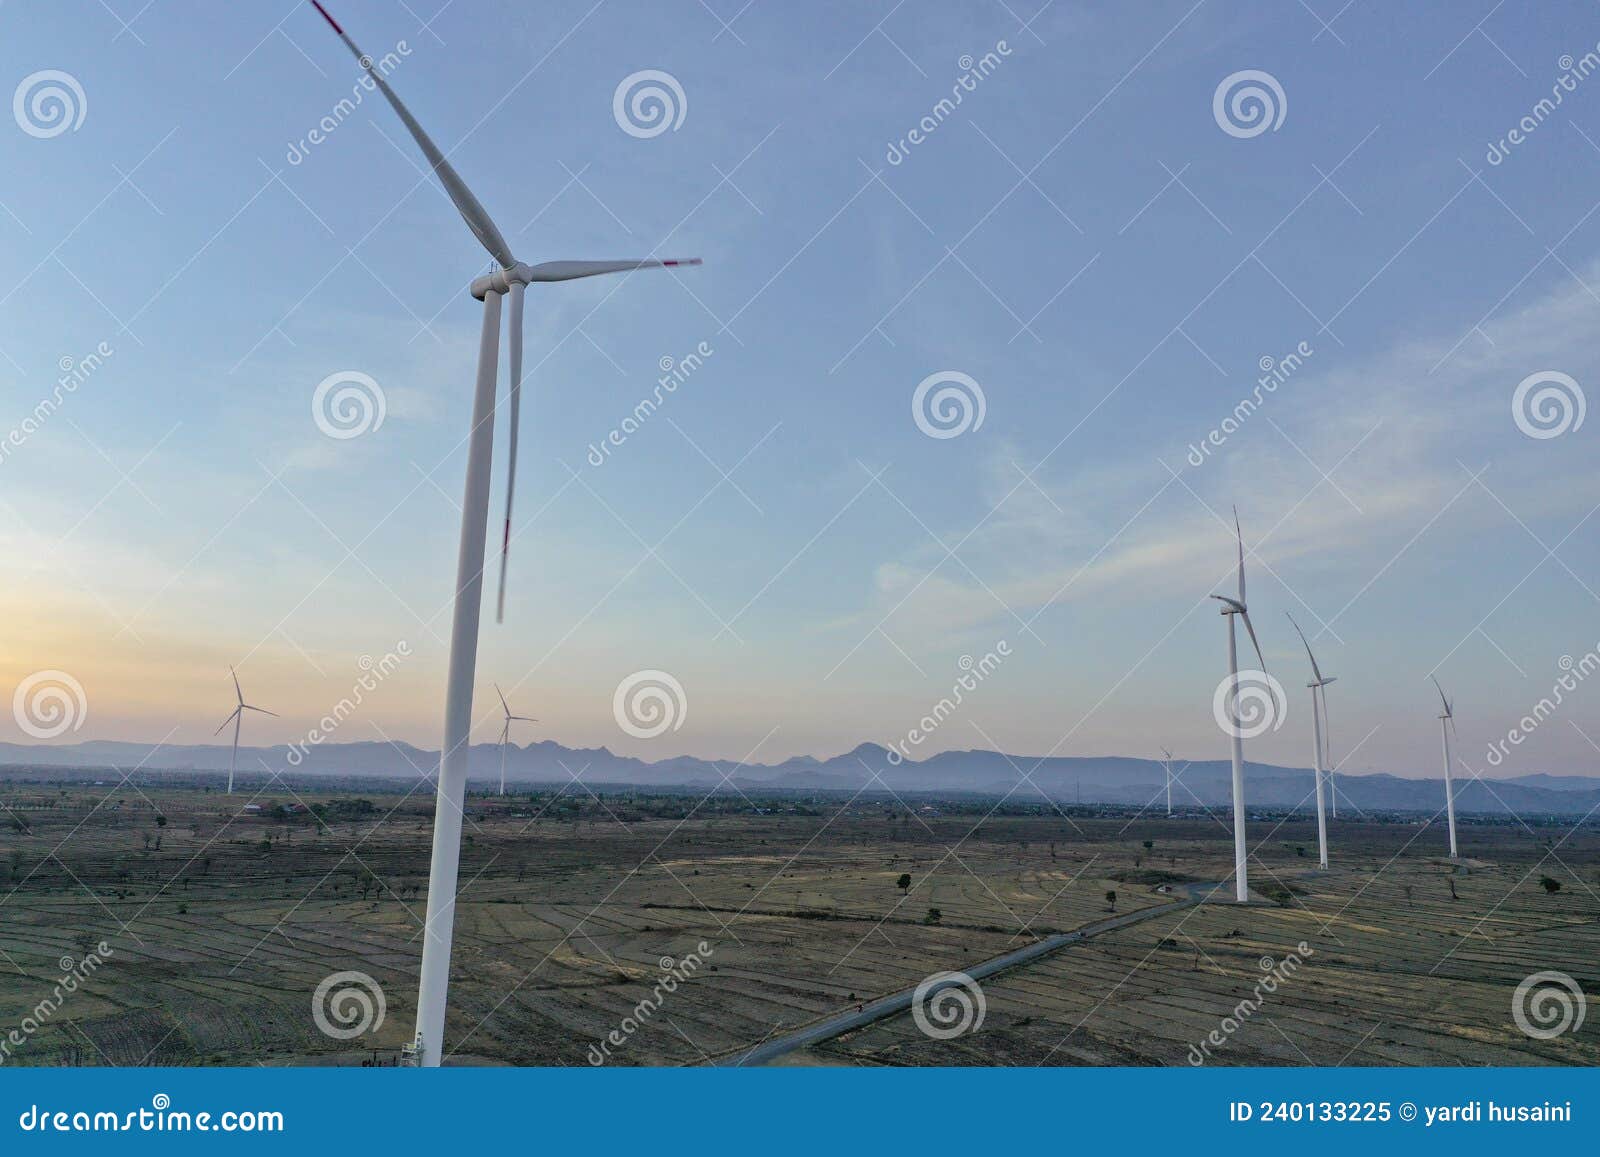 wind electrical, jeneponto south sulawesi